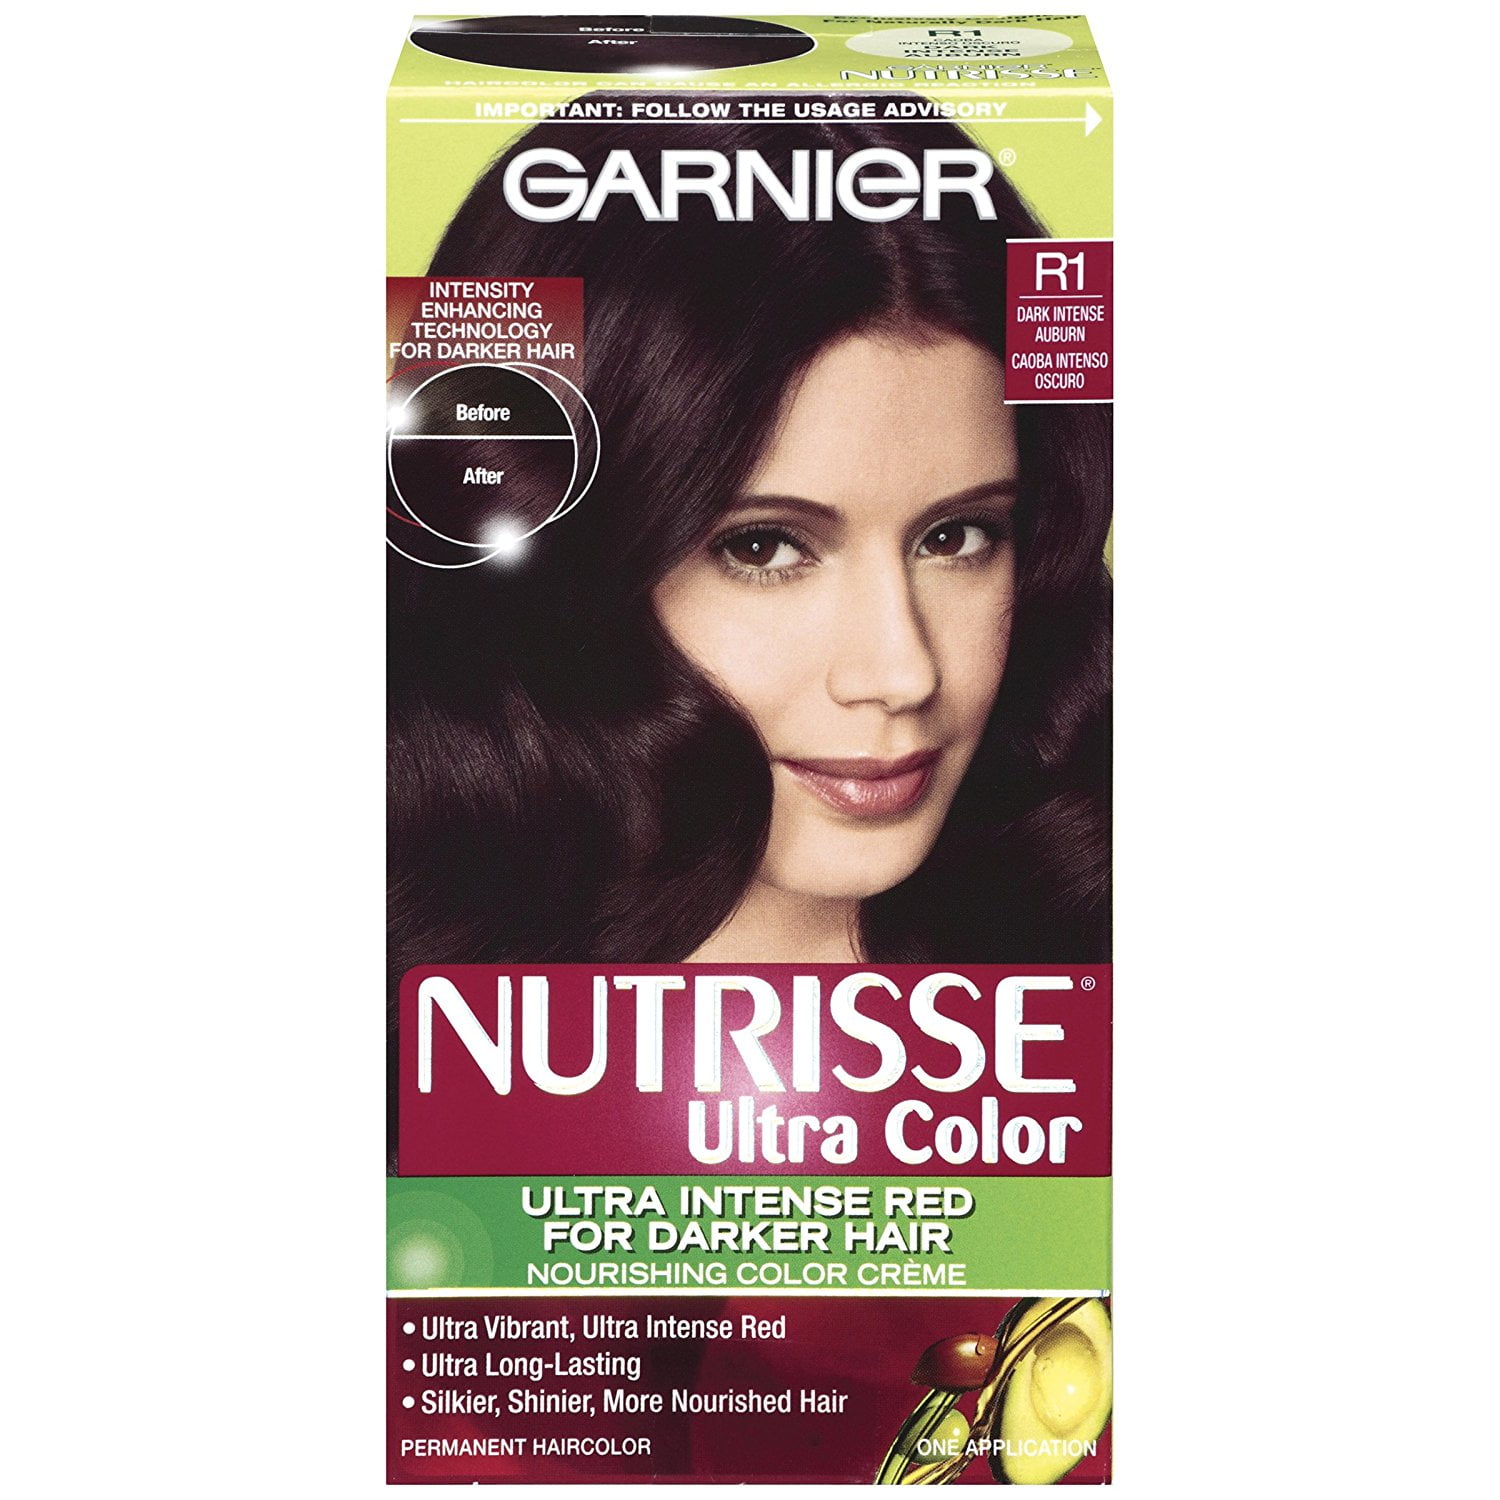 Nutrisse Haircolor R1 Dark Intense Auburn Nourishing Color Creme Permanent Intense Red For Naturally Dark Hair By Garnier Walmart Com